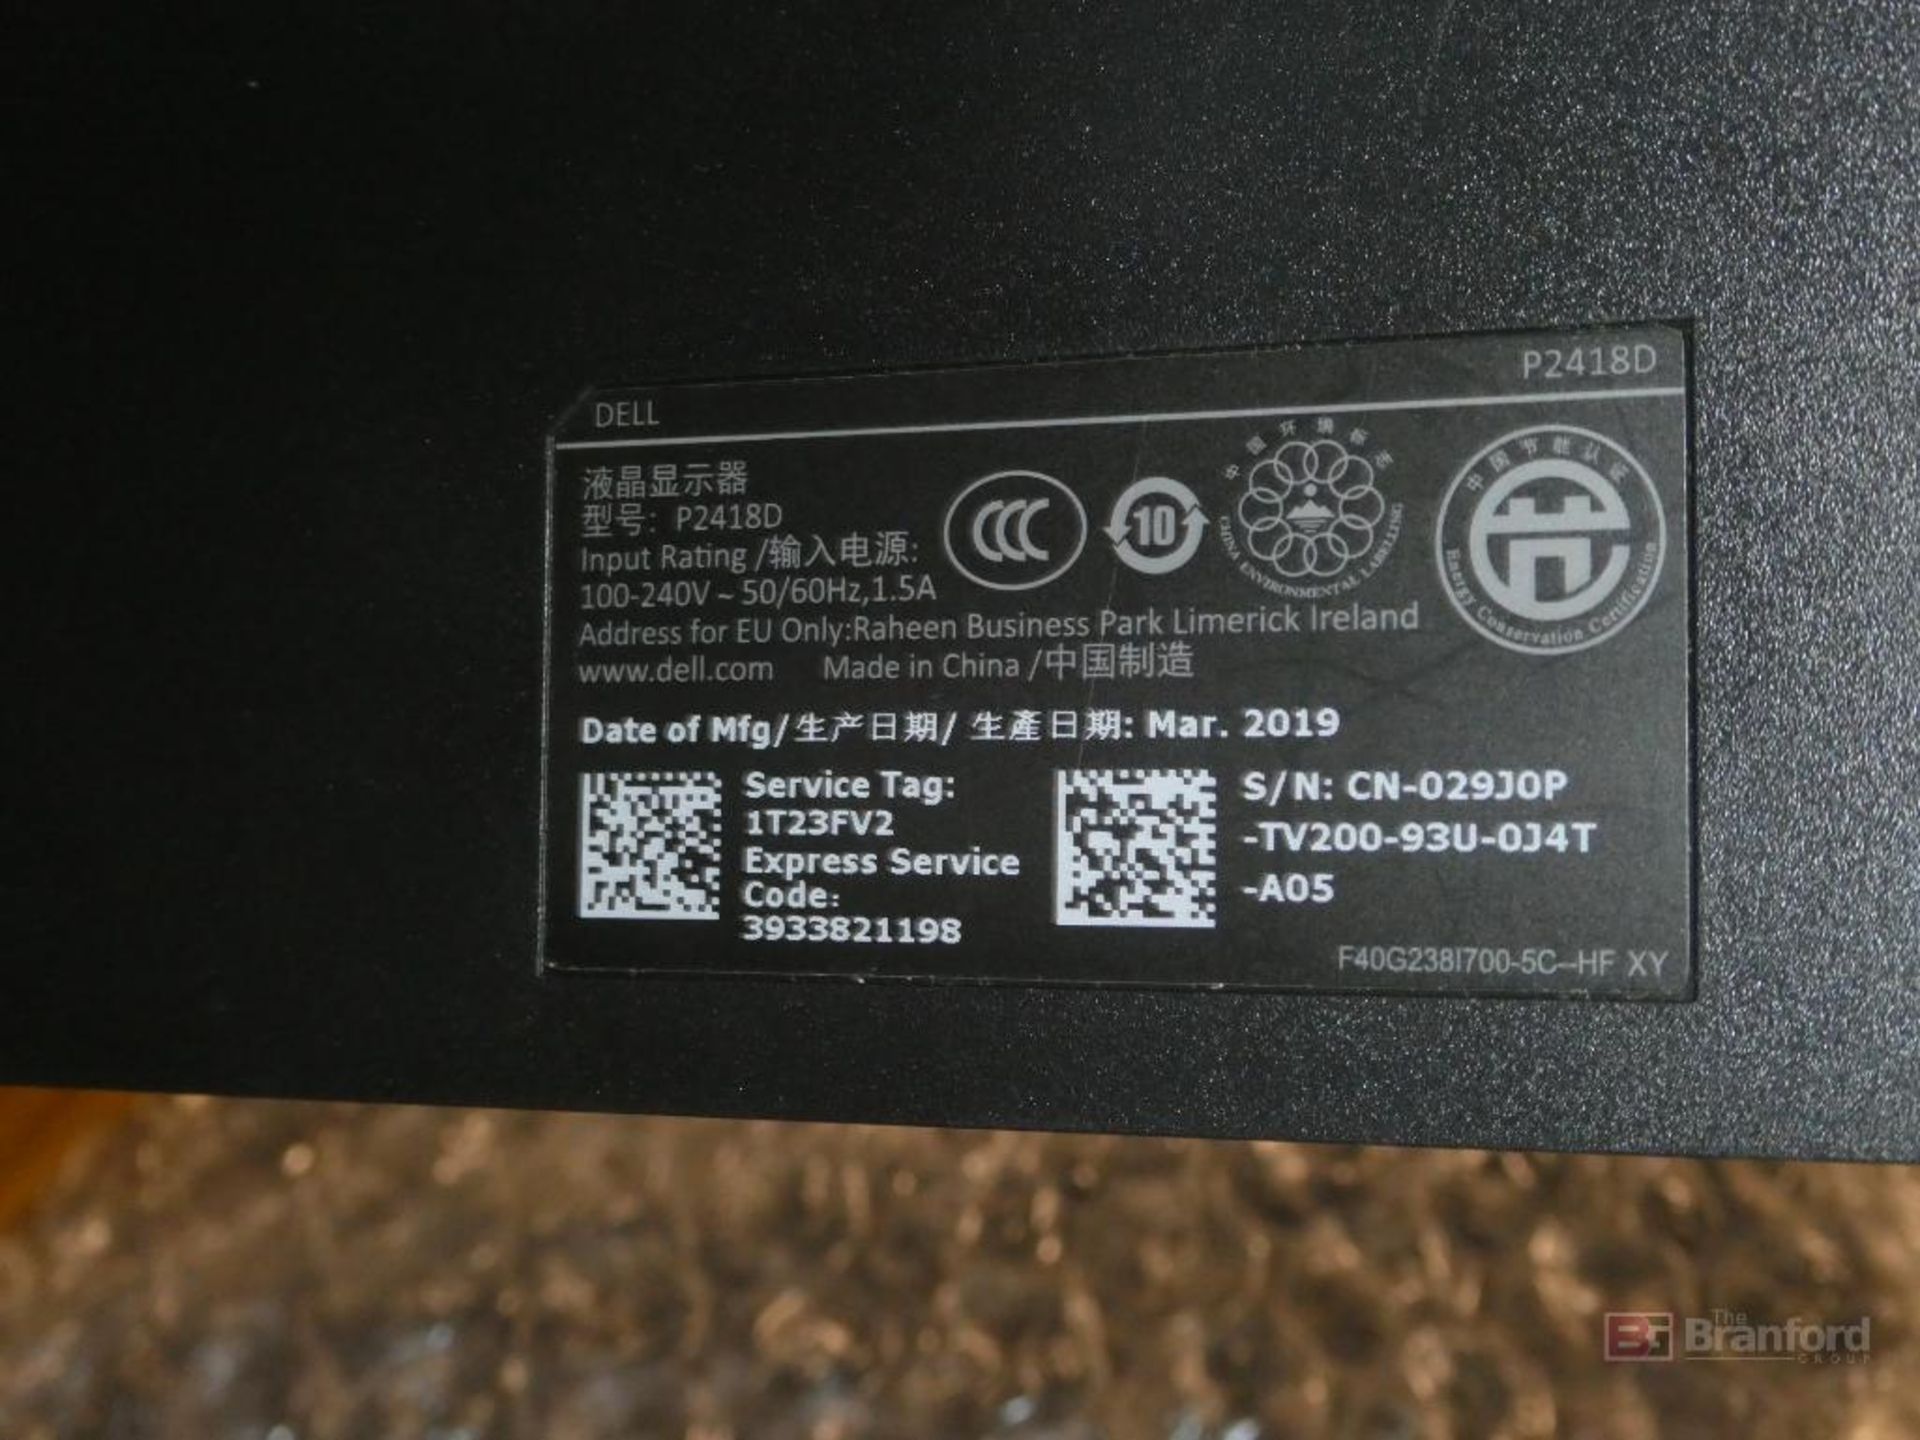 (4) Dell P2418D, 24" LED Monitors - Image 3 of 3